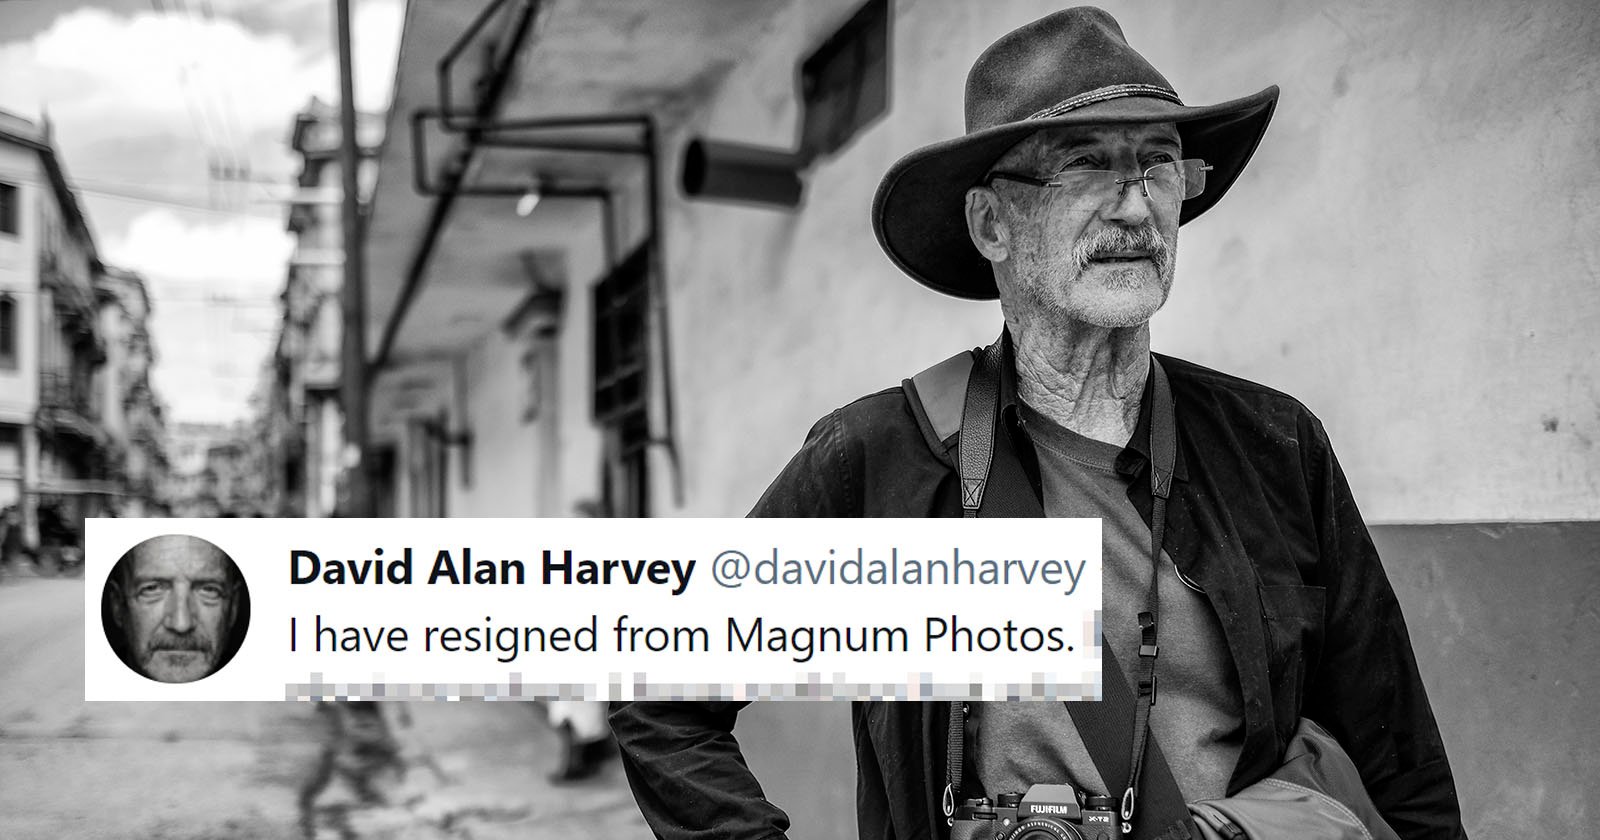 David Alan Harvey Has Resigned From Magnum Photos